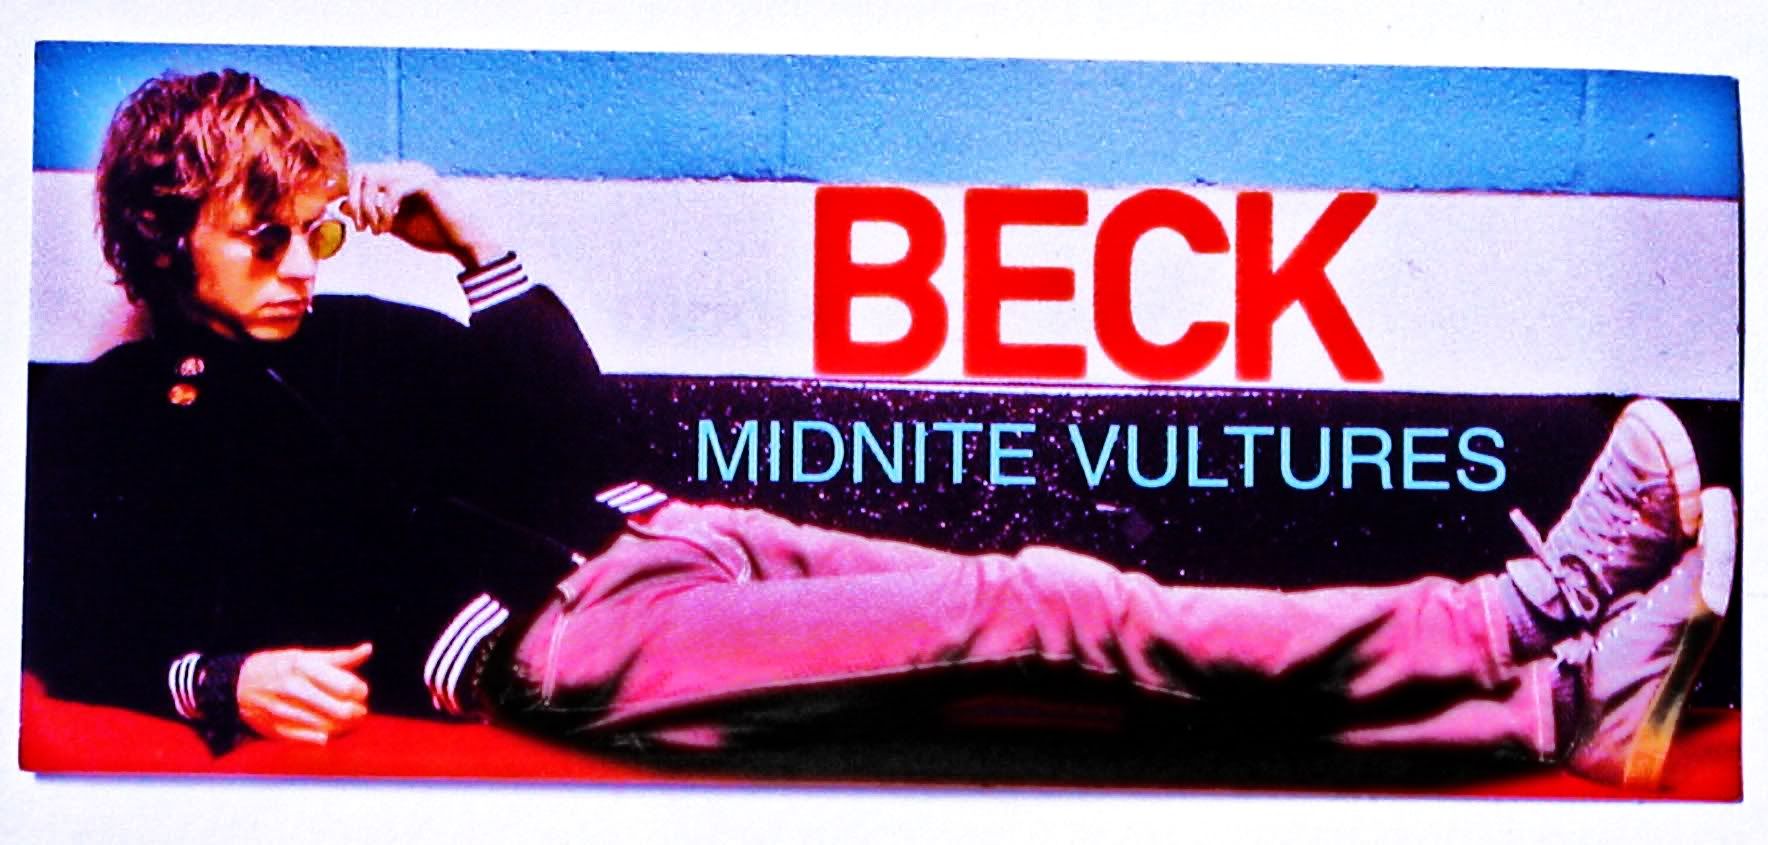 Beck Midnight Vultures